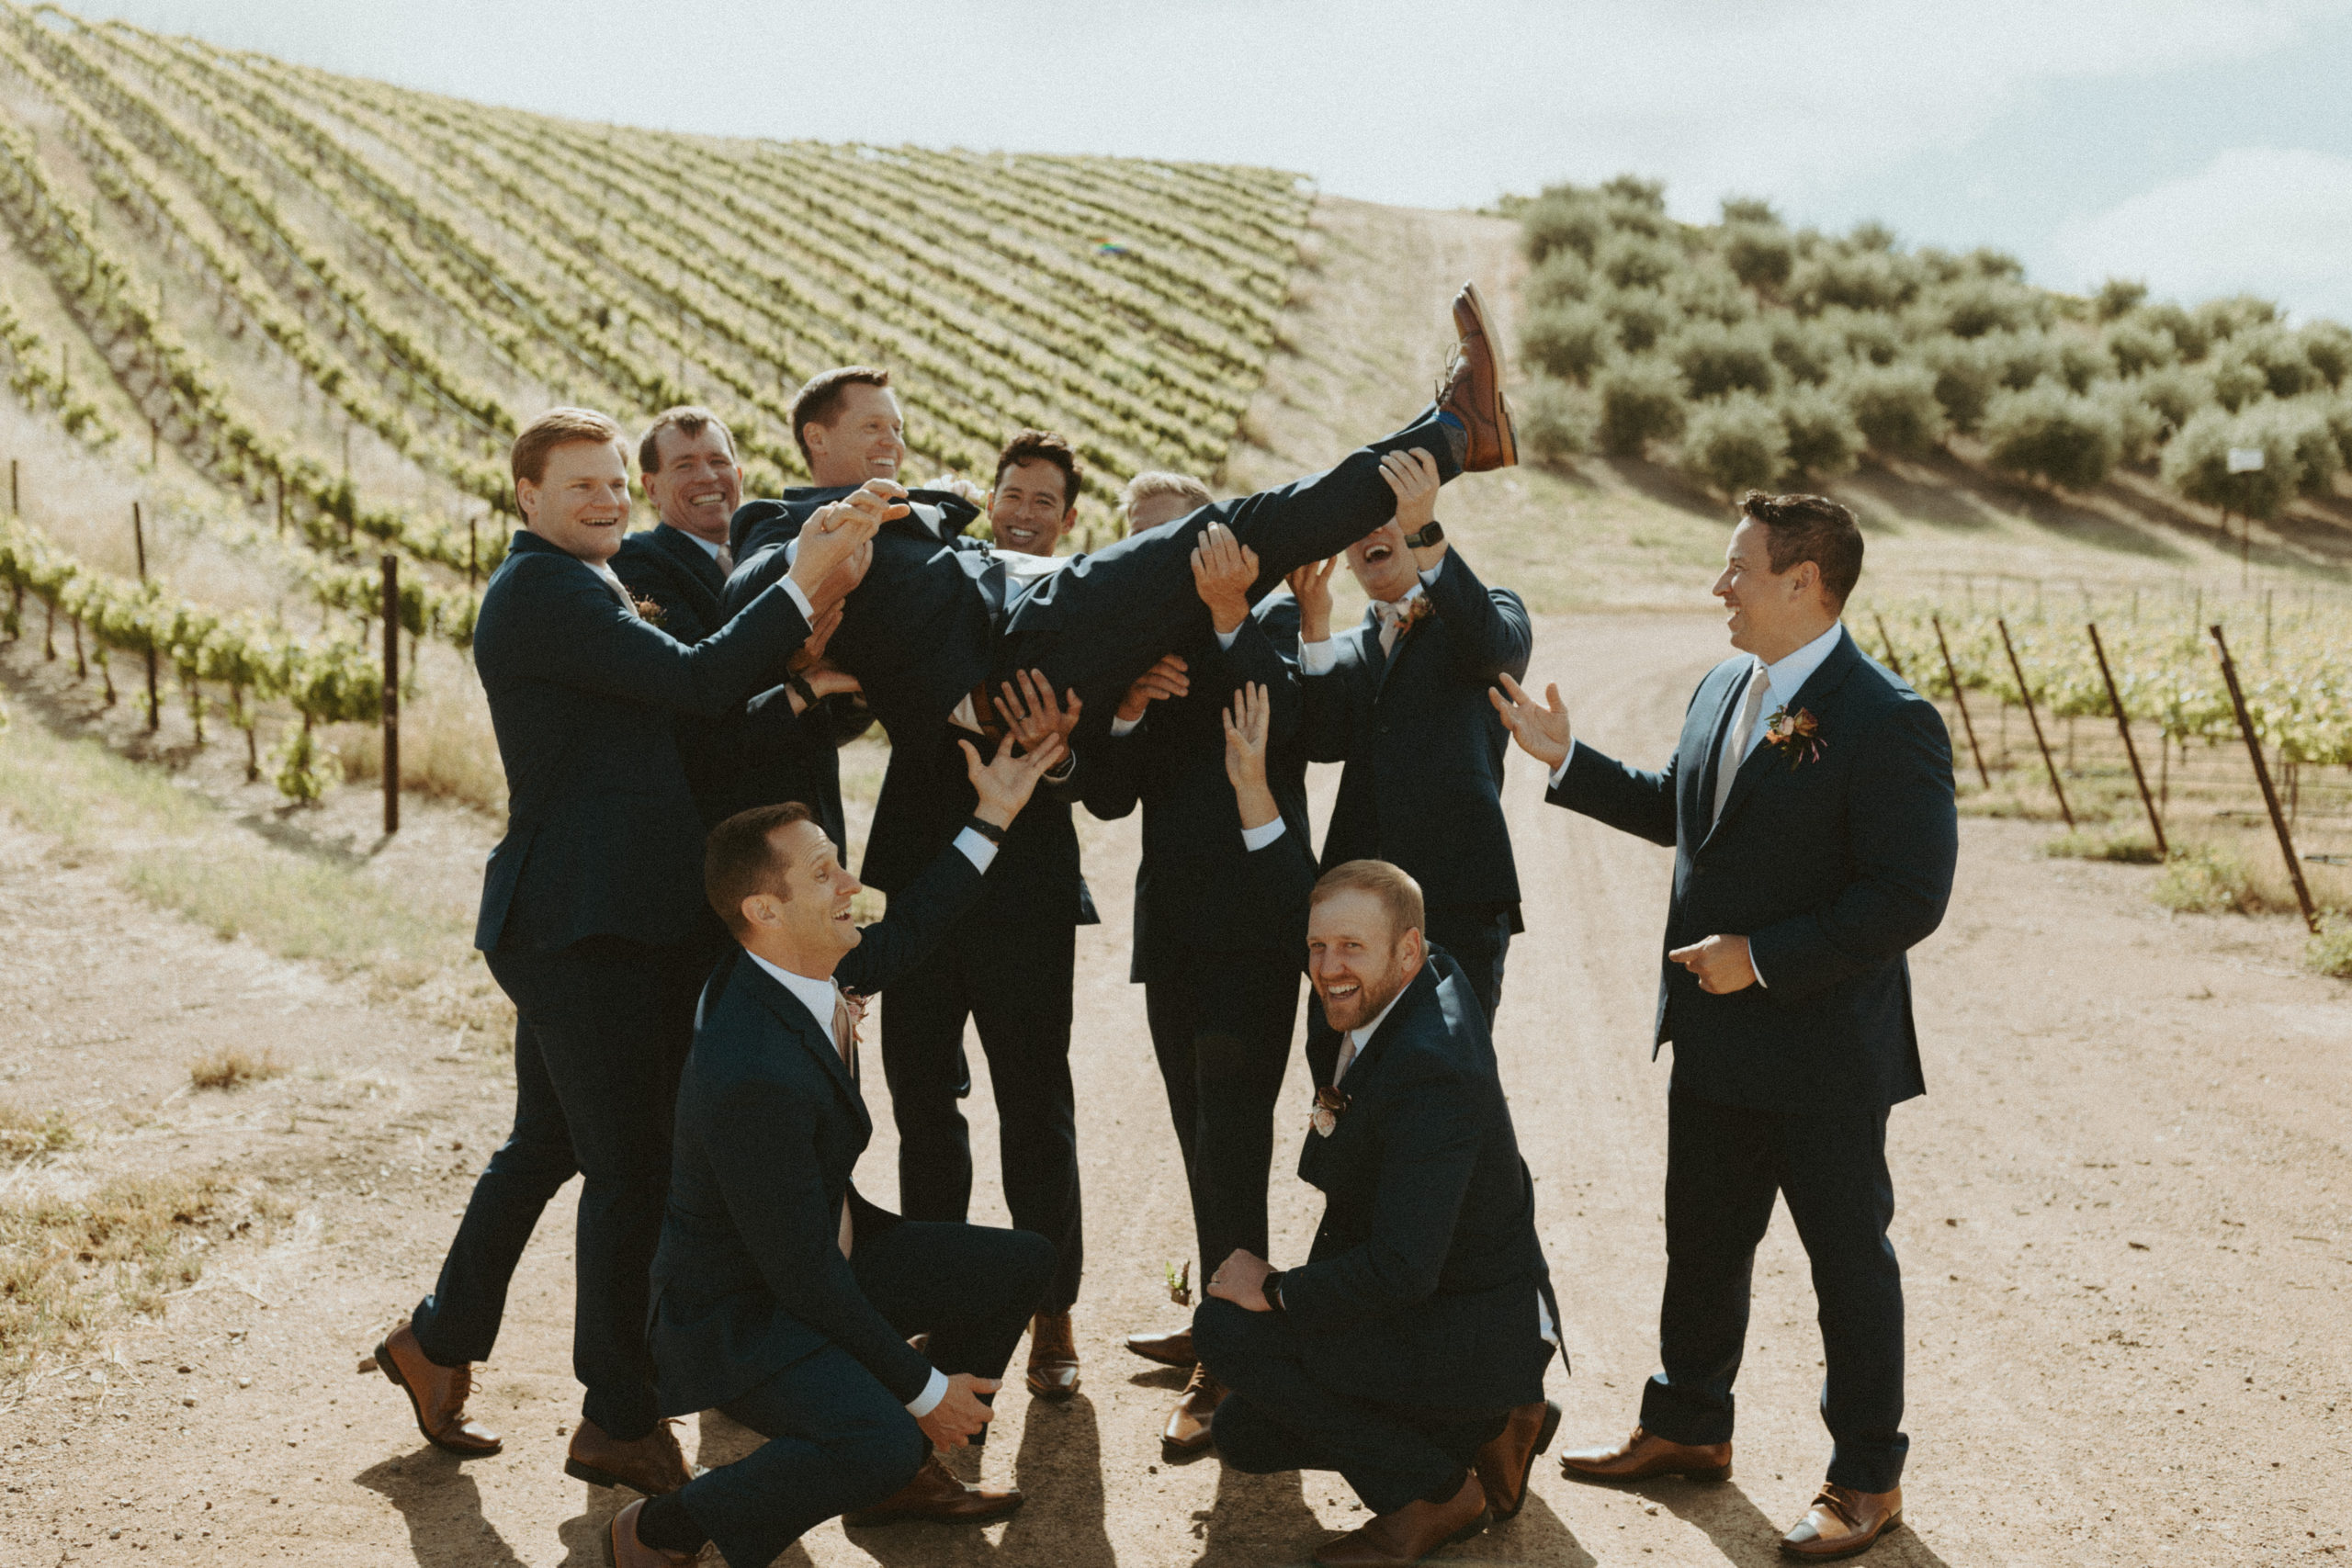 the groomsmen enjoying the vineyard